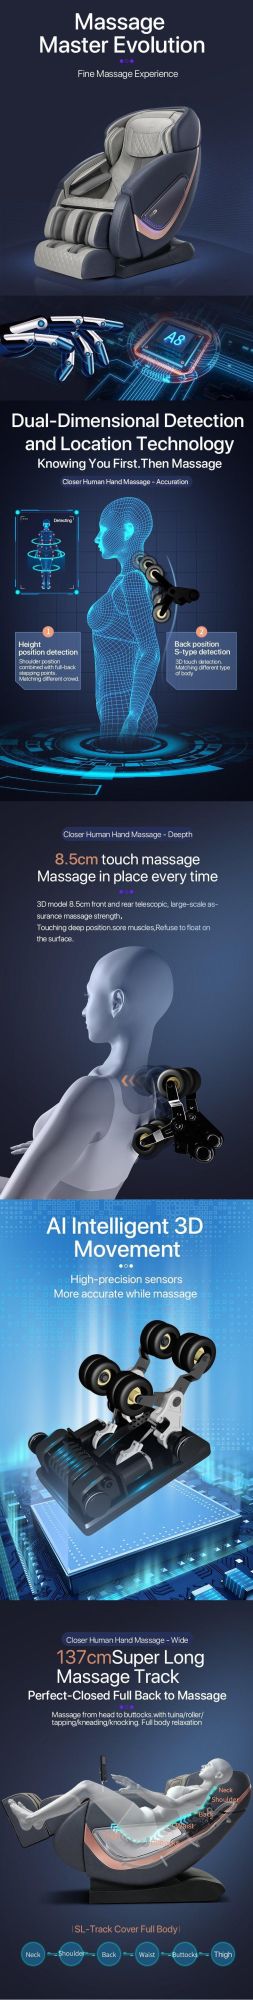 Full Body Massage Chair Price Most Popular Salon Massage Chair